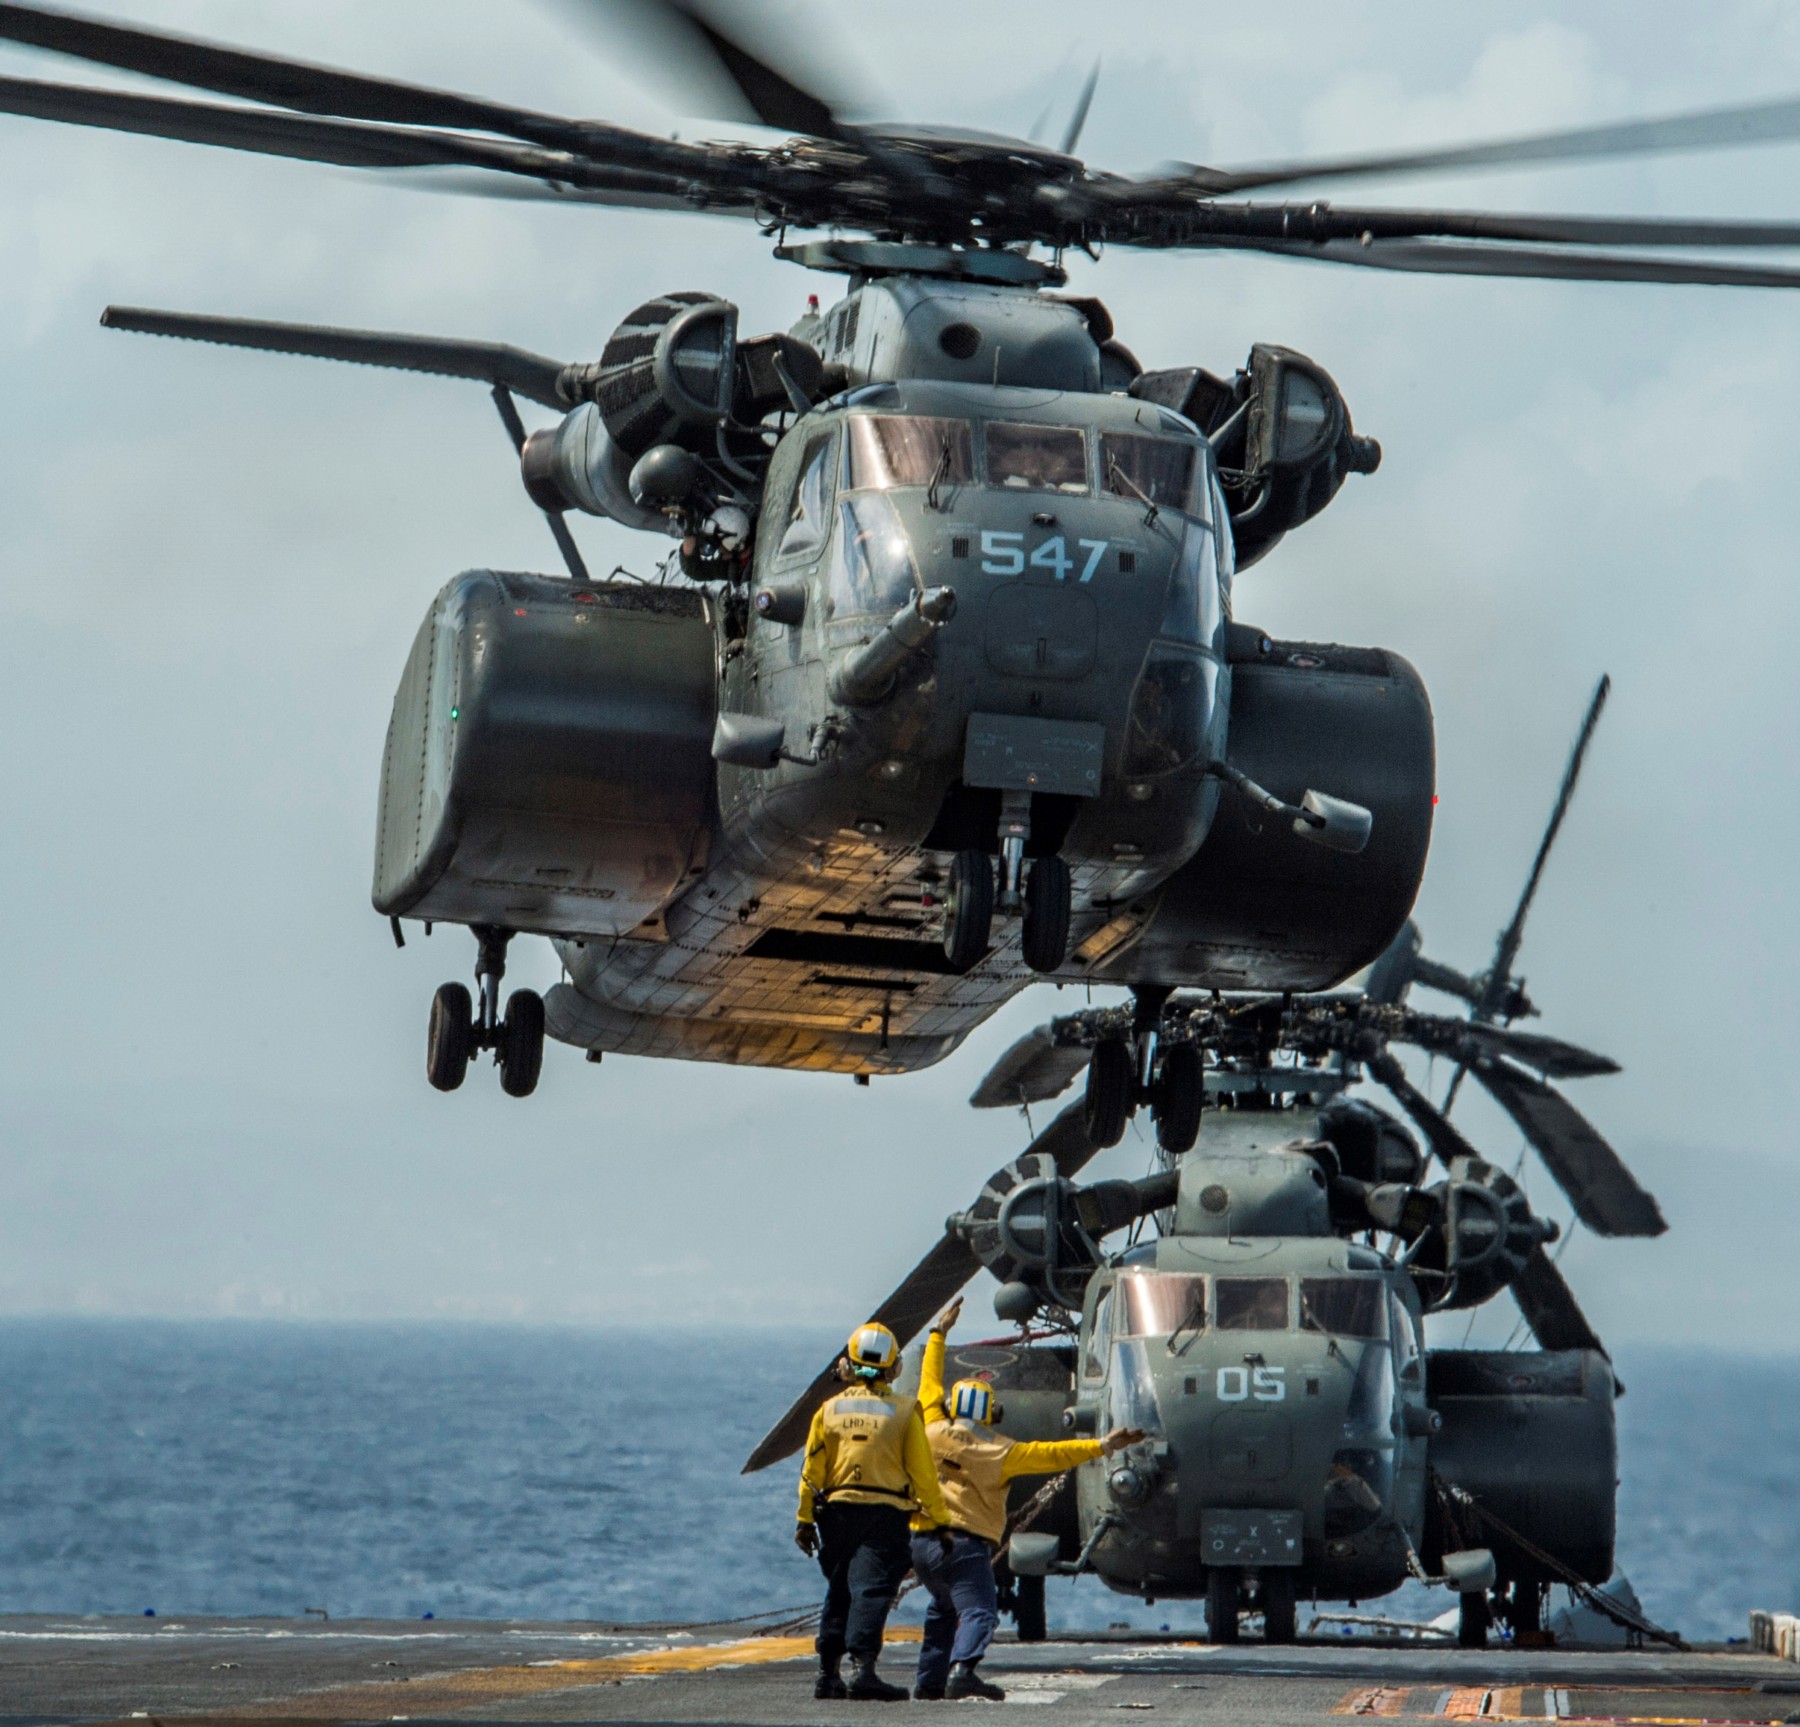 hm-14 vanguard helicopter mine countermeasures squadron navy mh-53e sea dragon 02